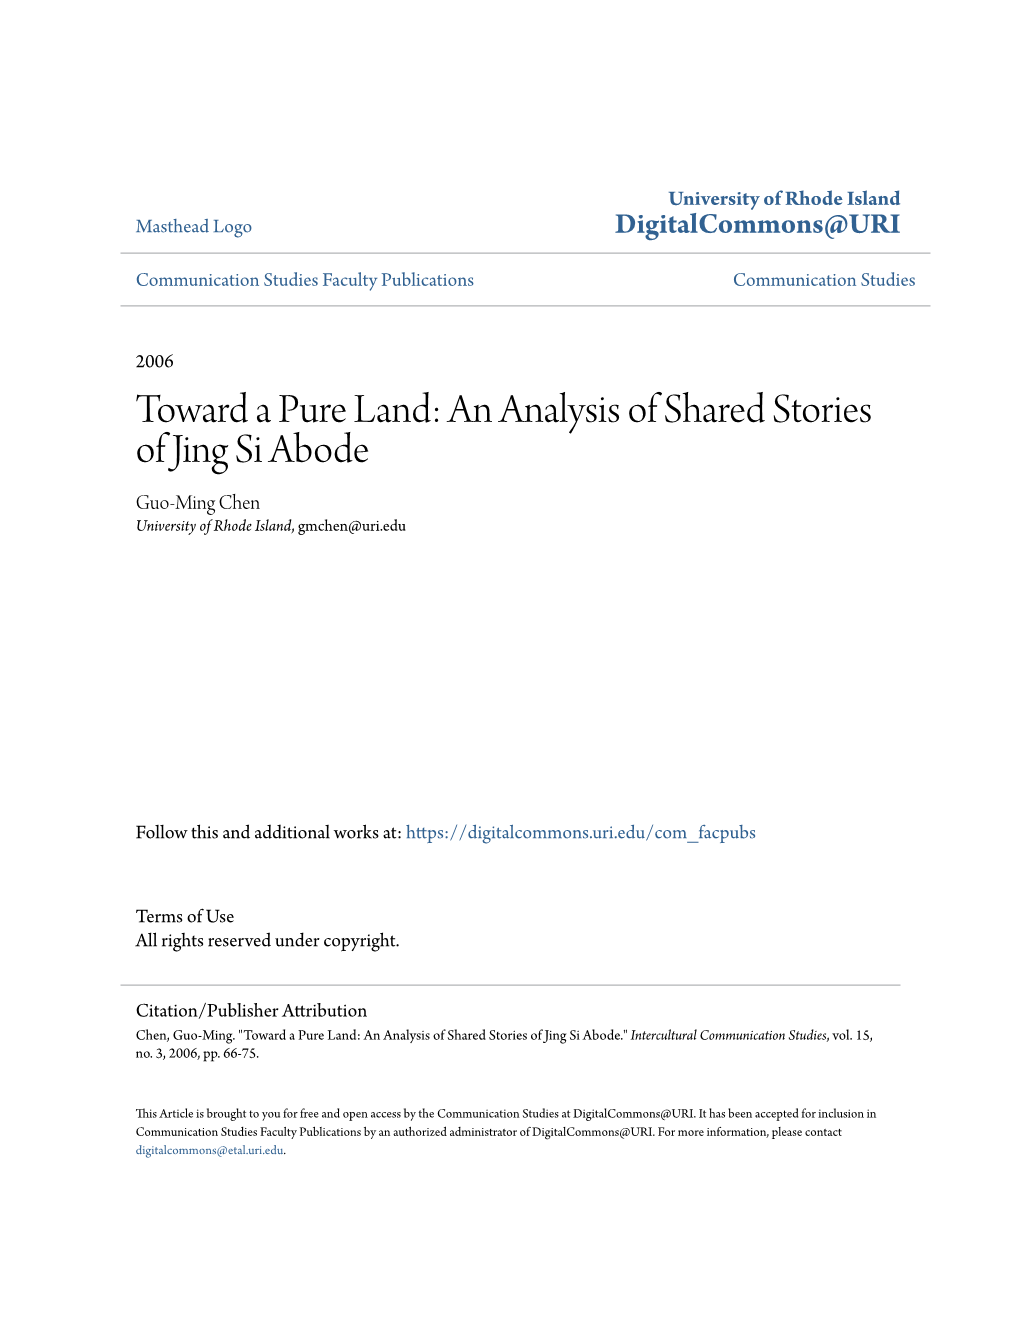 An Analysis of Shared Stories of Jing Si Abode Guo-Ming Chen University of Rhode Island, Gmchen@Uri.Edu